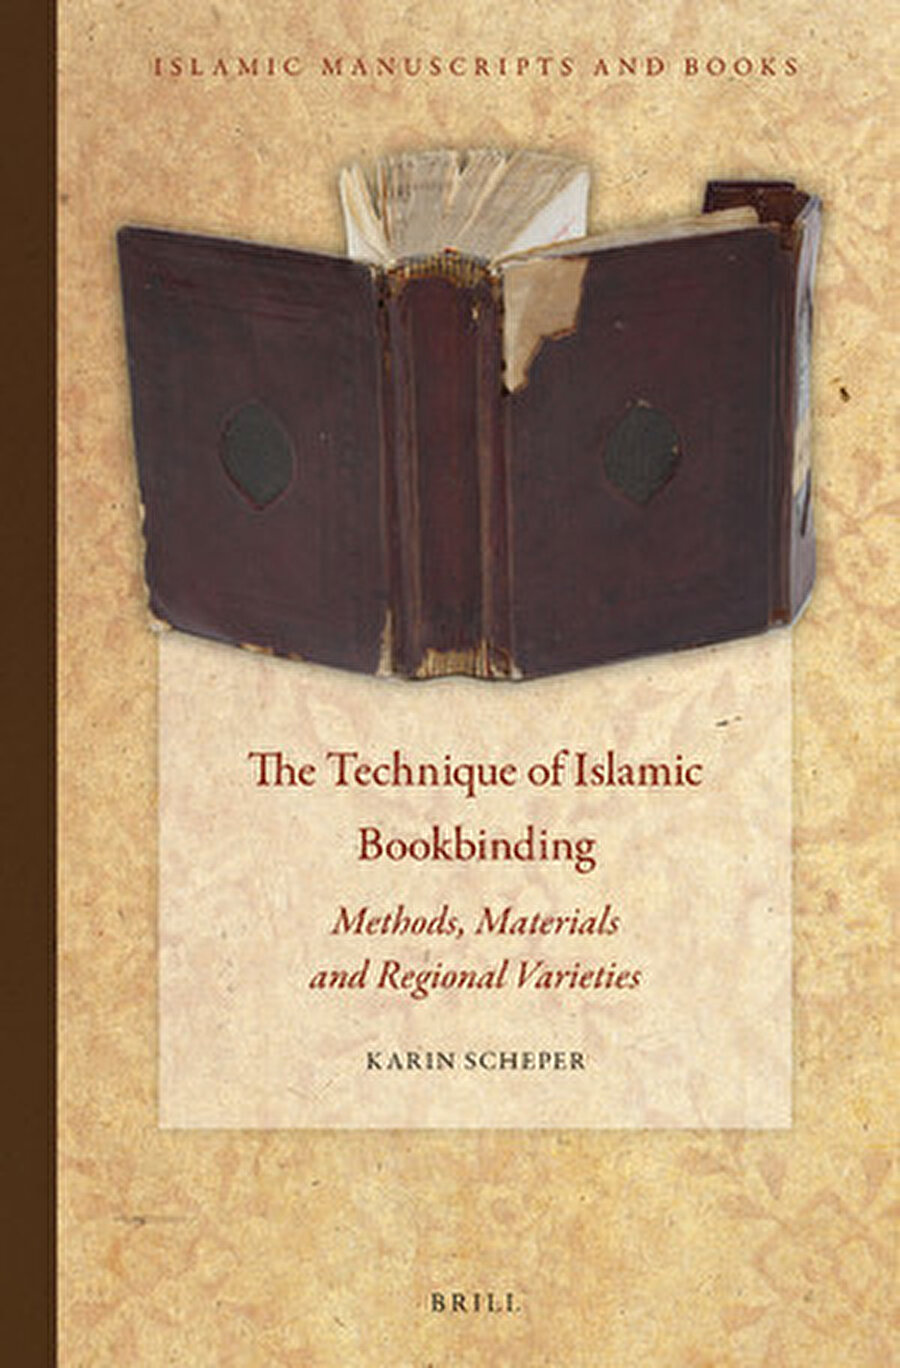 The Technique of Islamic Bookbinding, Karin Scheper, Brill